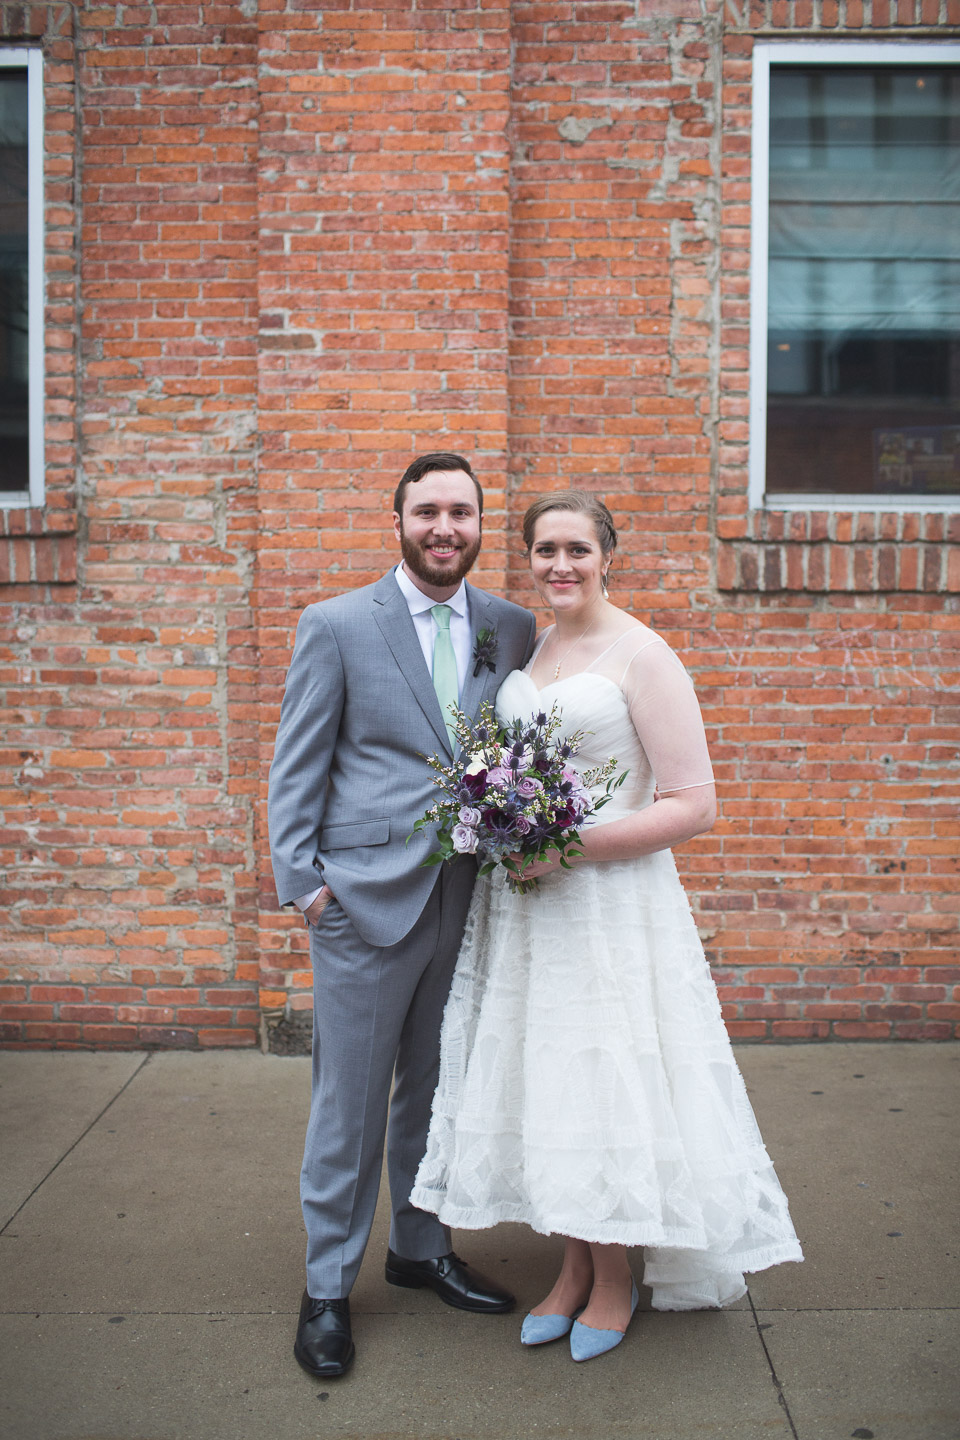 Brianna + Eric | An Pastel Wedding At The Ann Arbor Art Center ...